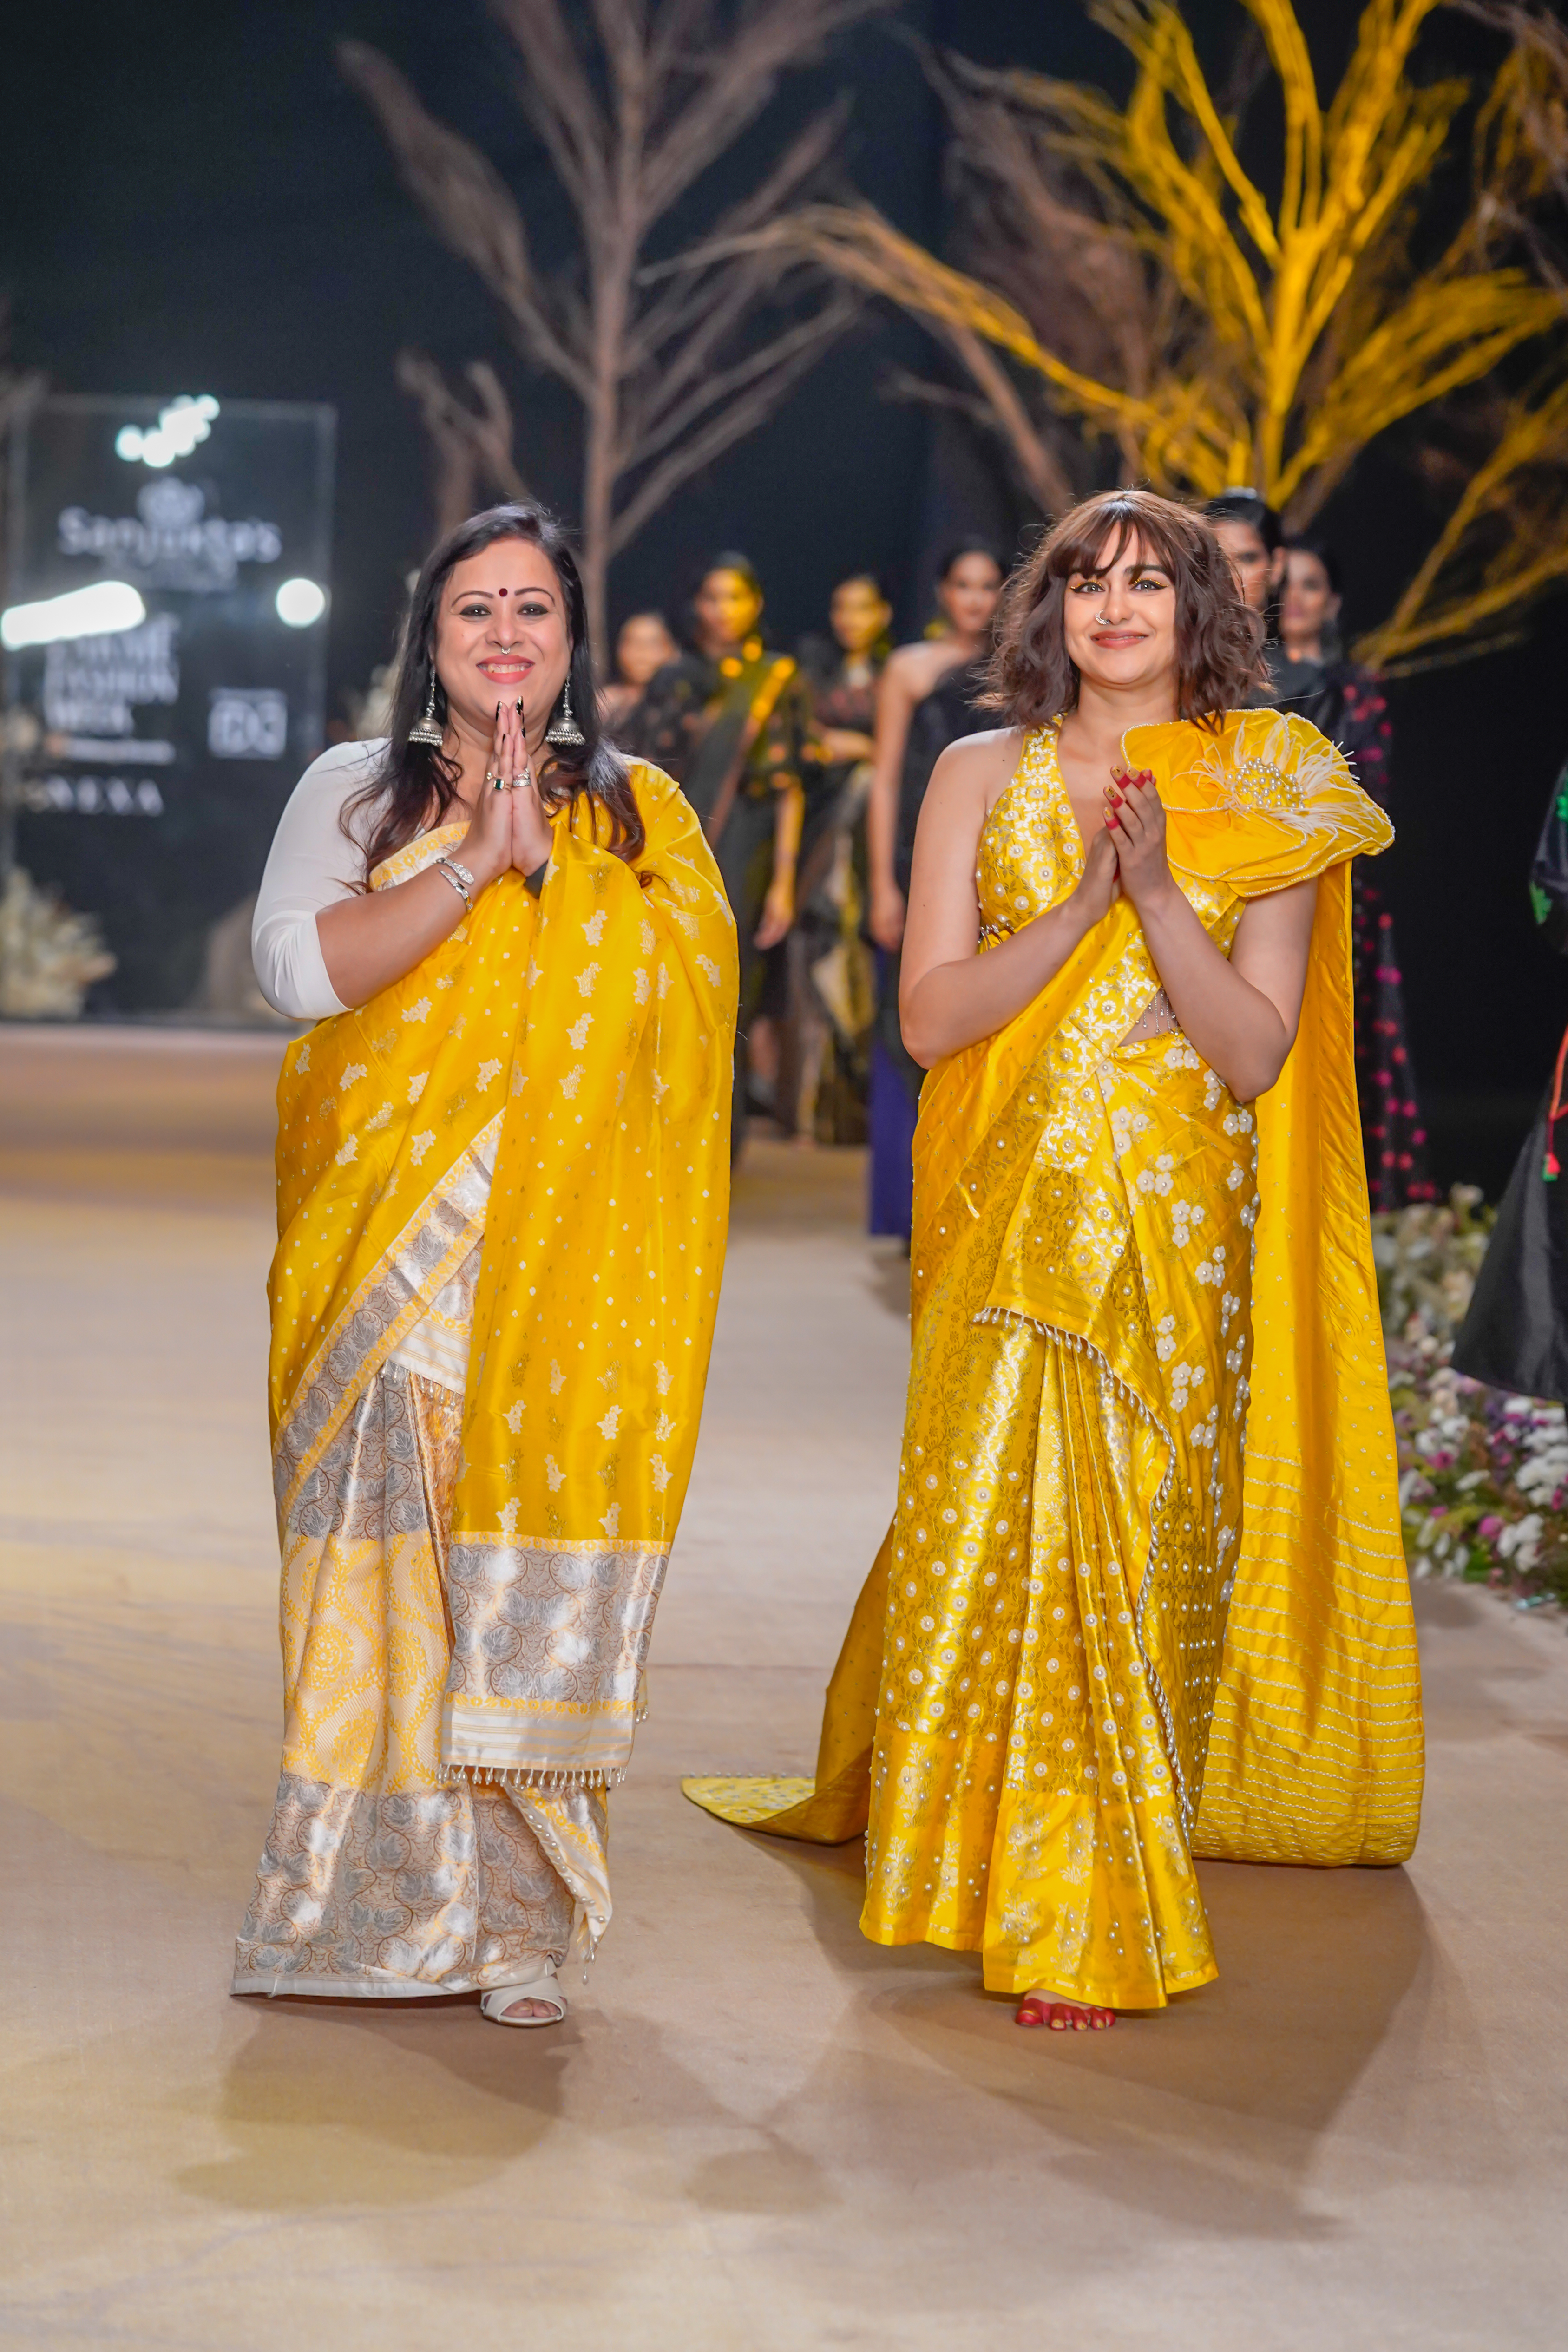 Actress Adah Sharma as show stopper for Sanjukta dutta at Lakme Fashion week 2023